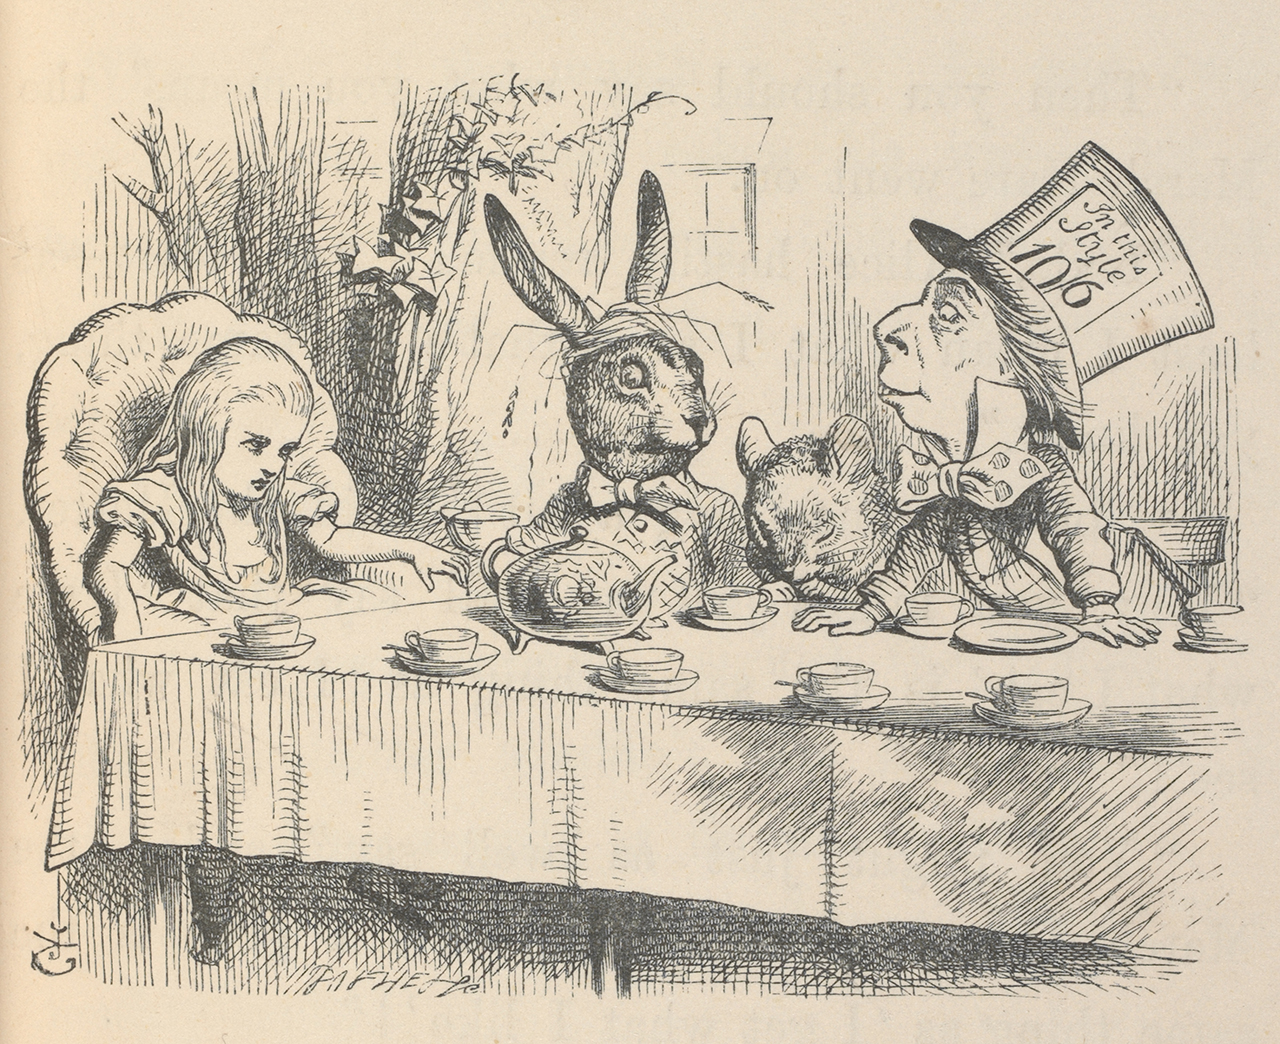 Illustration from Alice’s Adventures in Wonderland